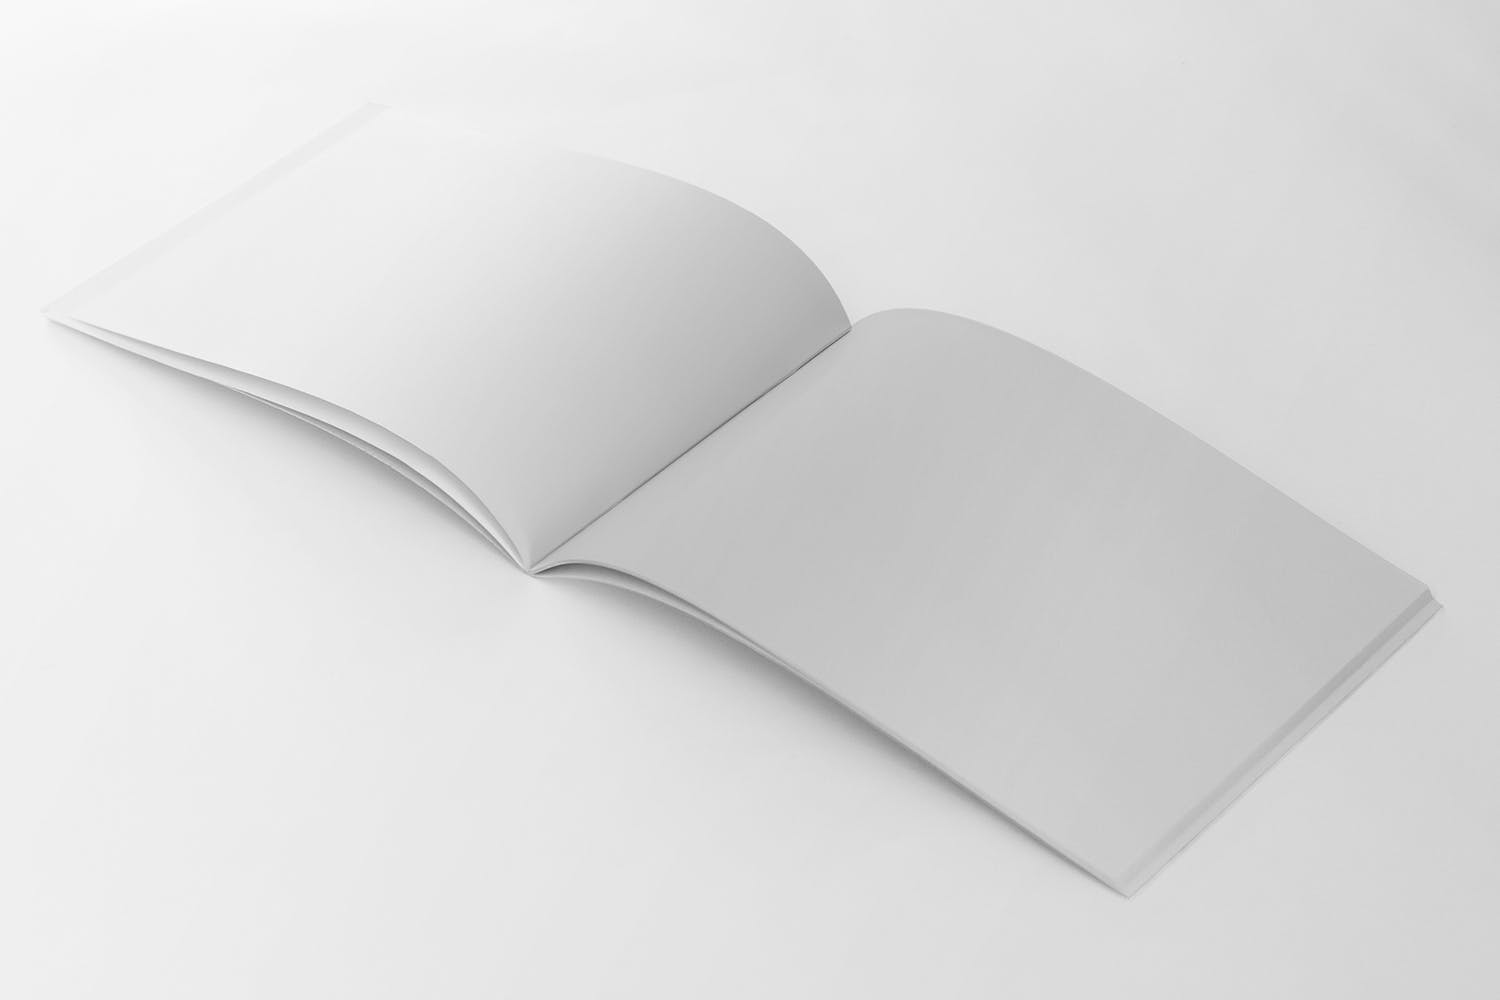 美国信纸规格宣传册内页透视图样机非凡图库精选 US Half Letter Brochure Mockup Perspective View插图(1)